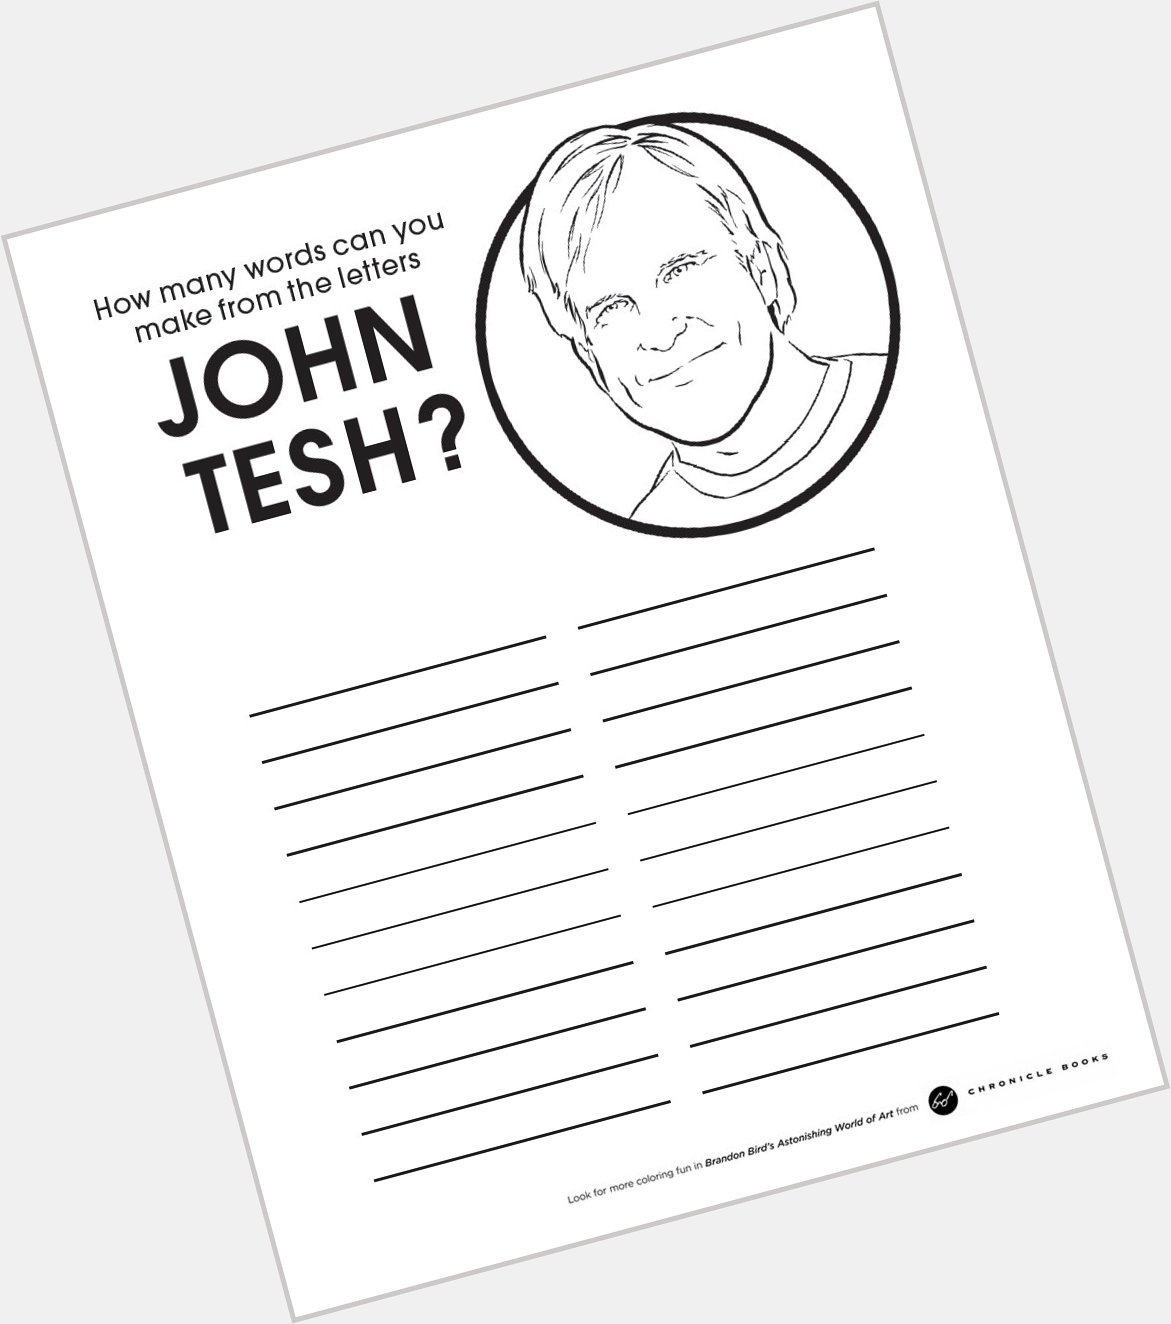 Happy Birthday to the big guy himself, Mr. John Tesh.  